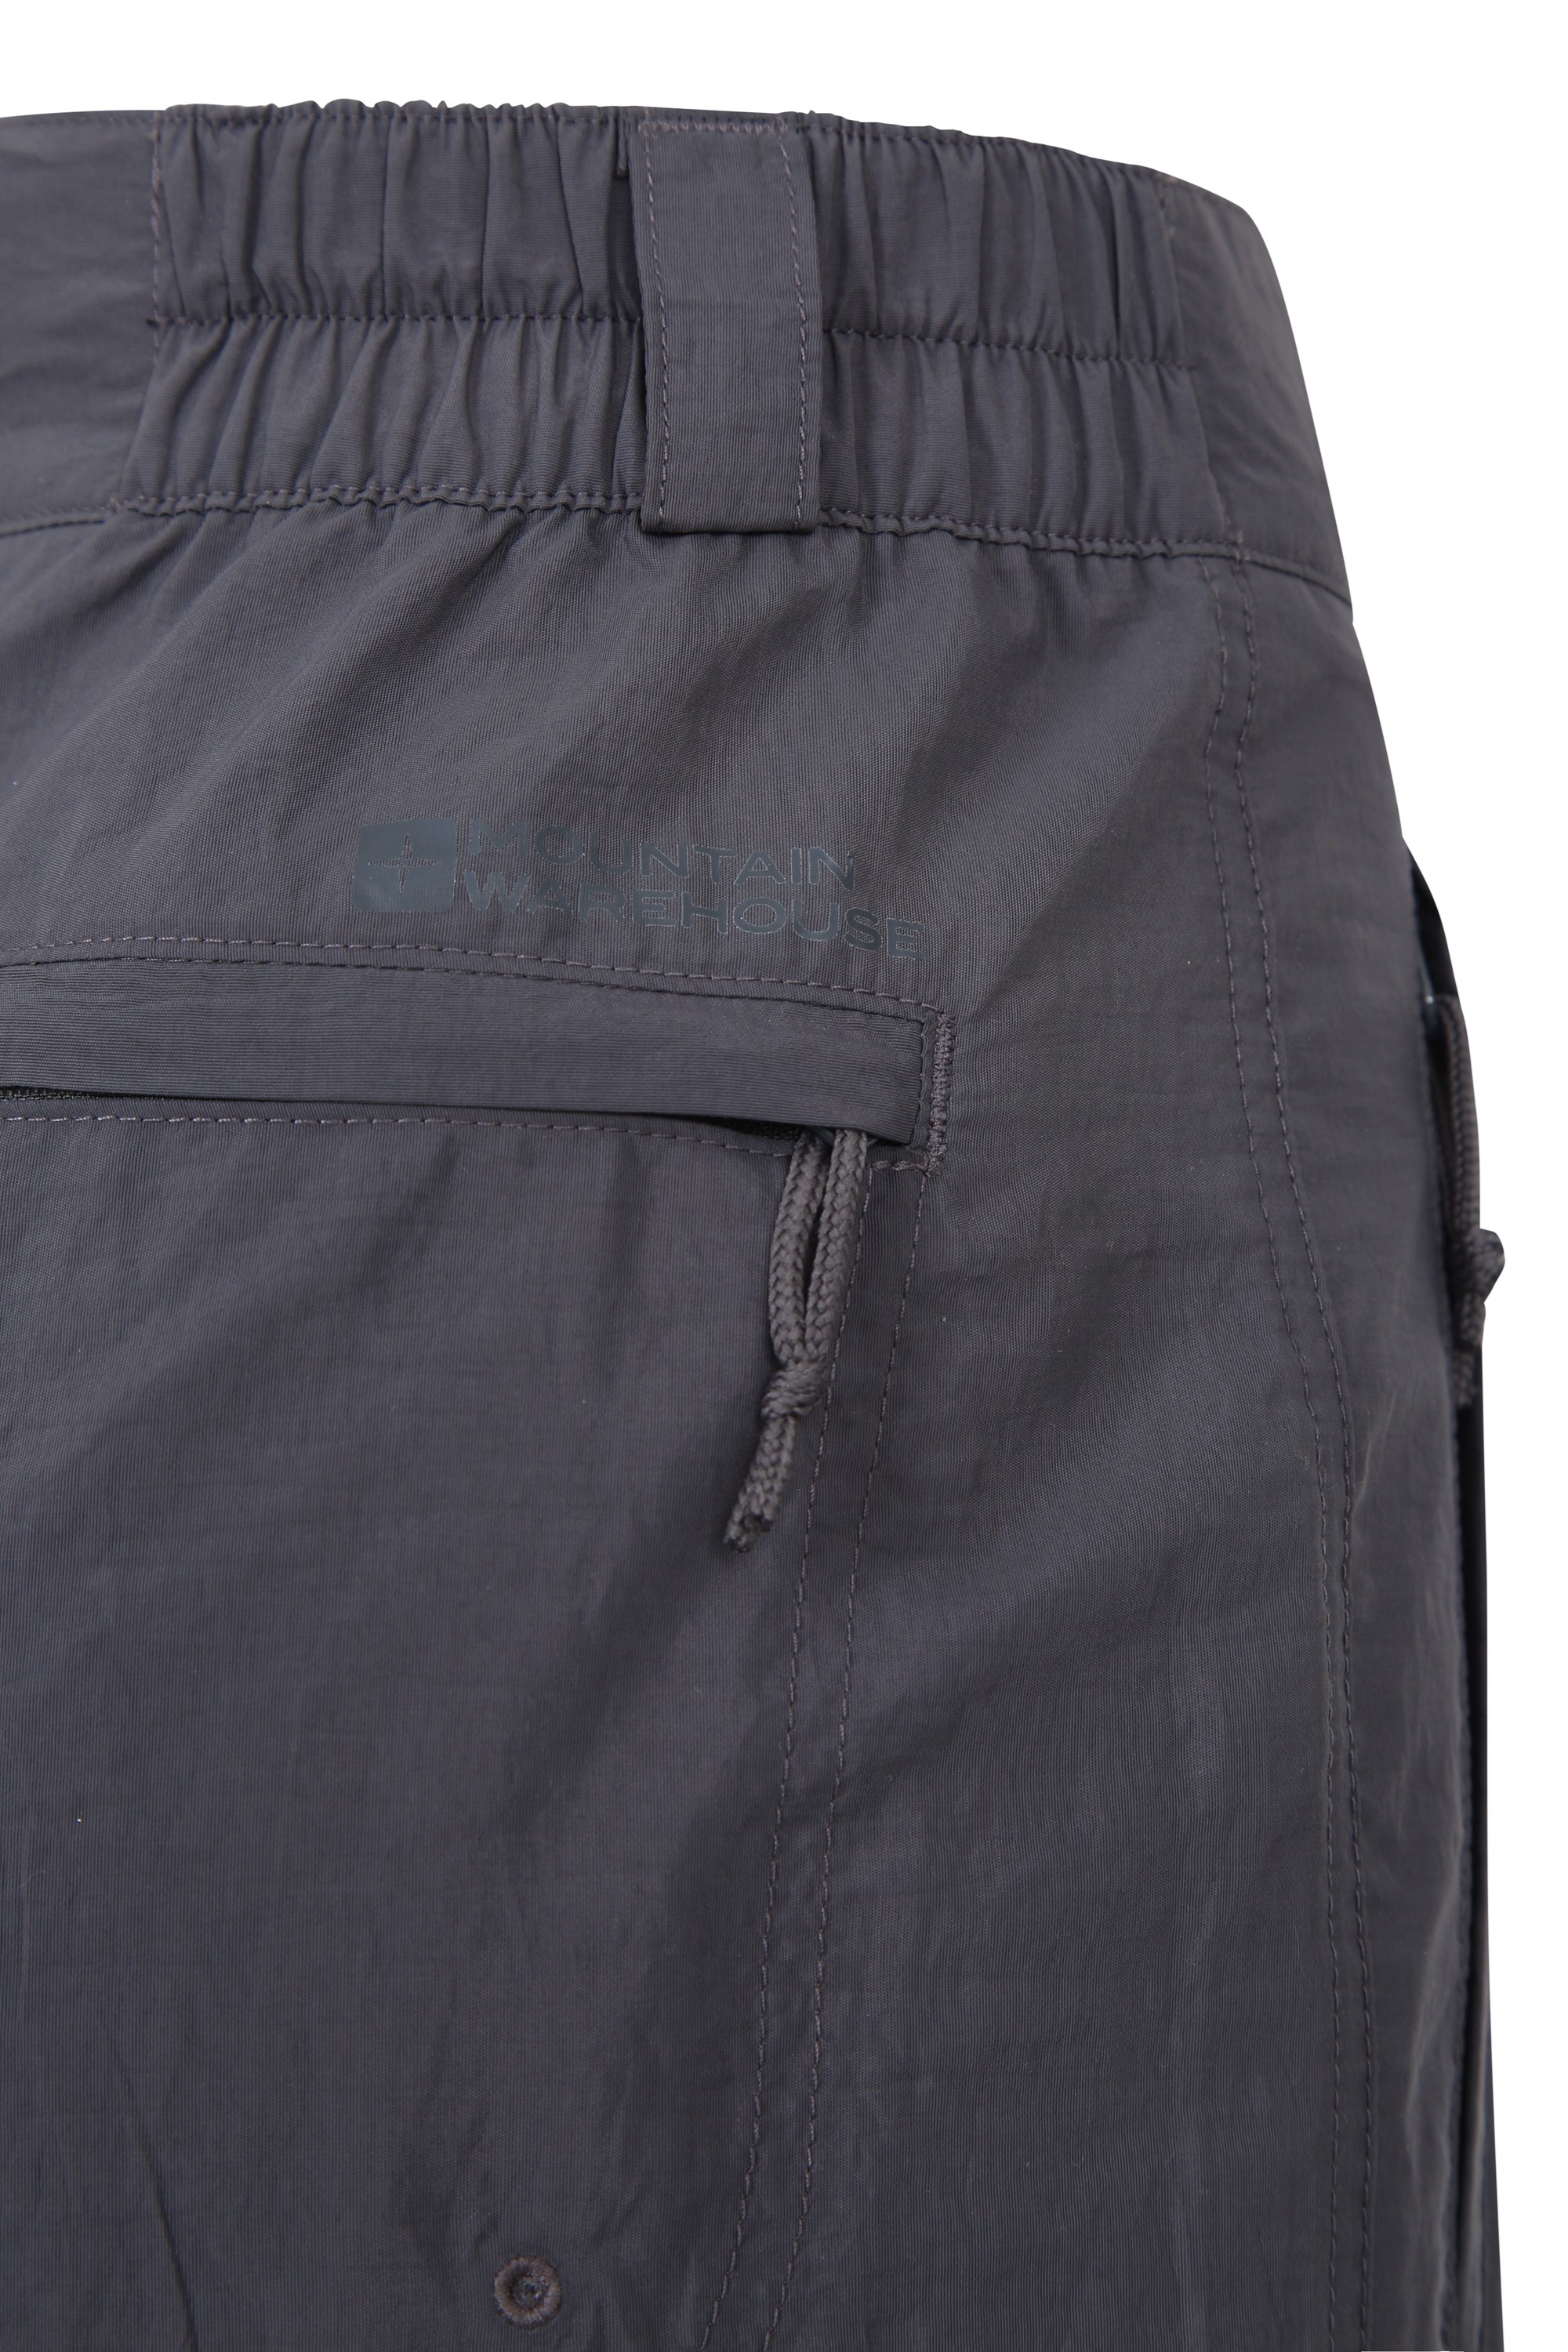 Mountain Warehouse Mens Explore Short Zip-Off Trouser Zip-Off Trousers 